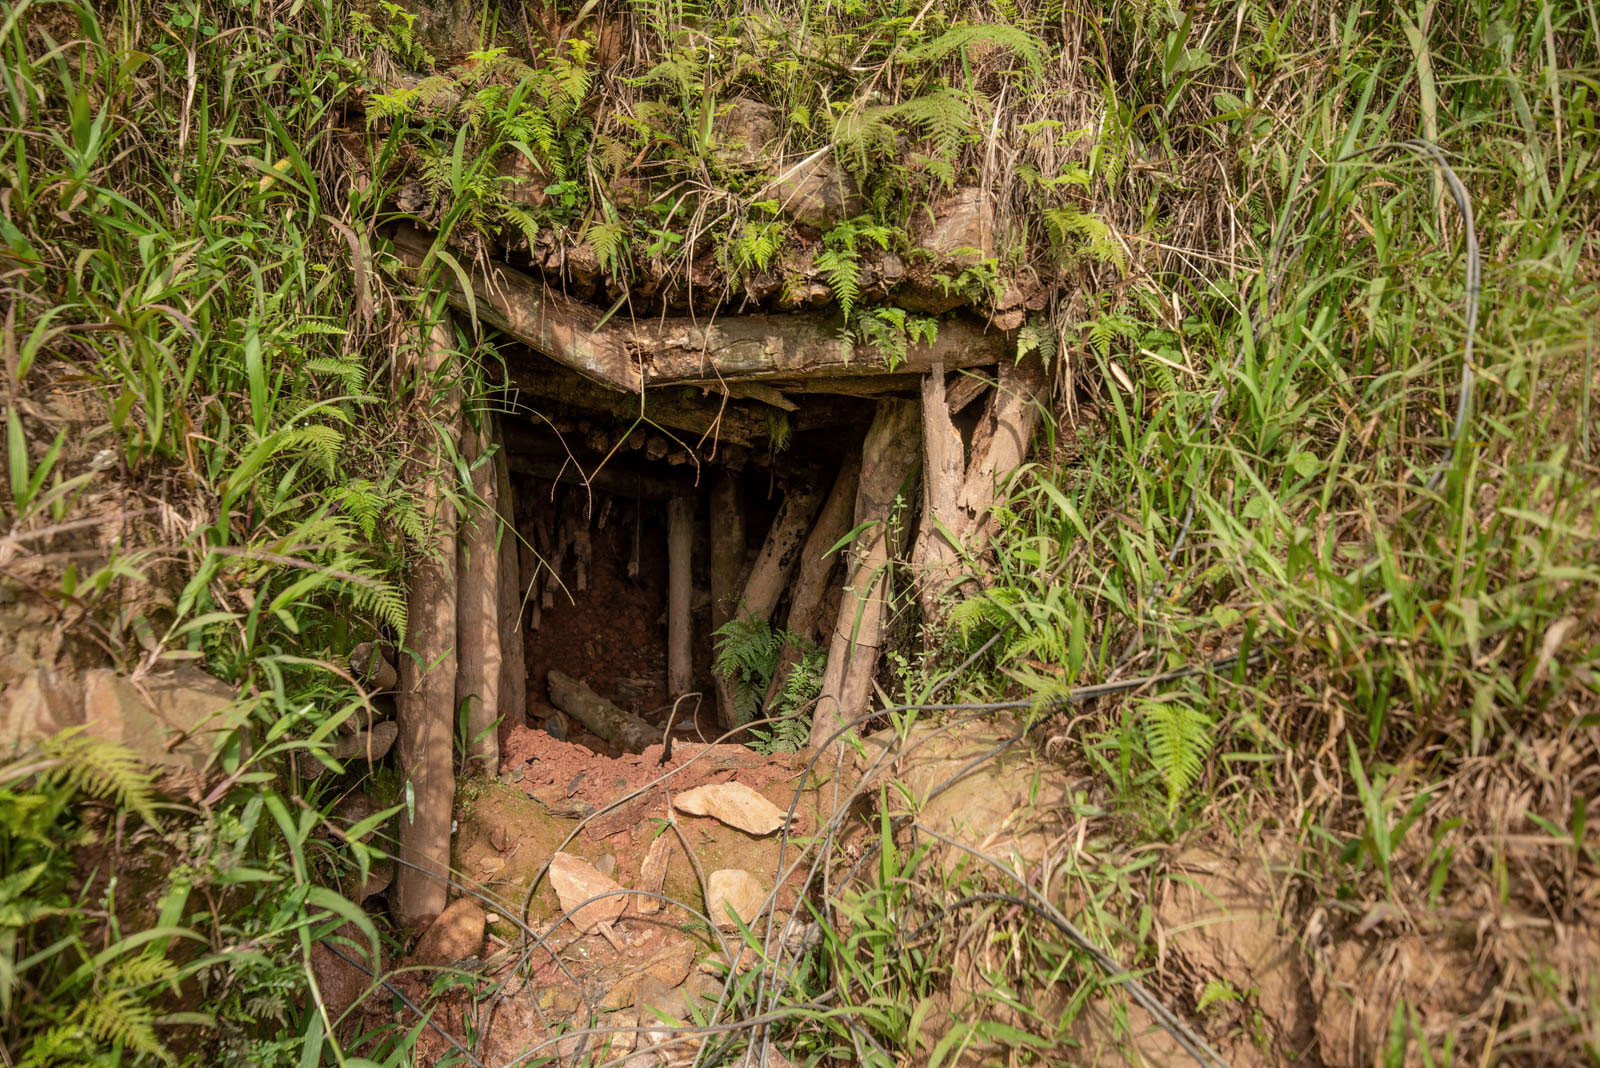 Province du Sud-Kivu, mars 2021. L’entrée effondrée d’un des périlleux puits de mine de Kamituga. © Moses Sawasawa pour la Fondation Carmignac